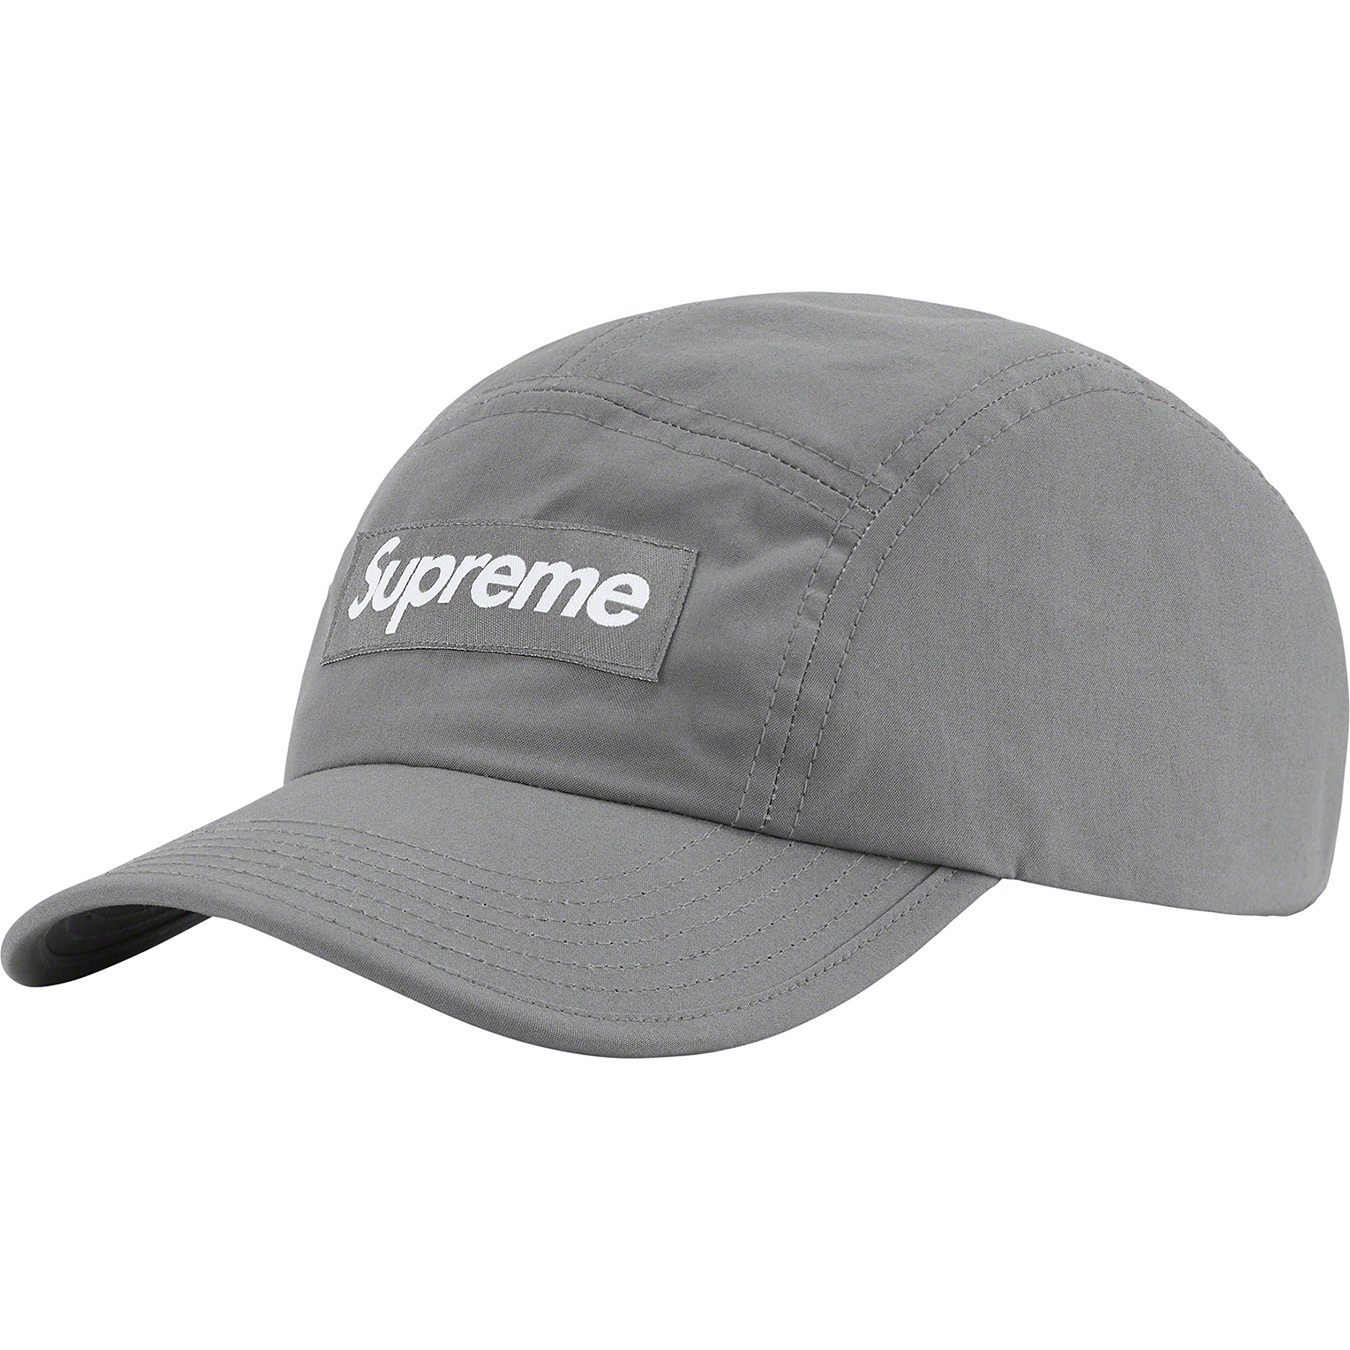 Supreme Ventile® Camp Cap